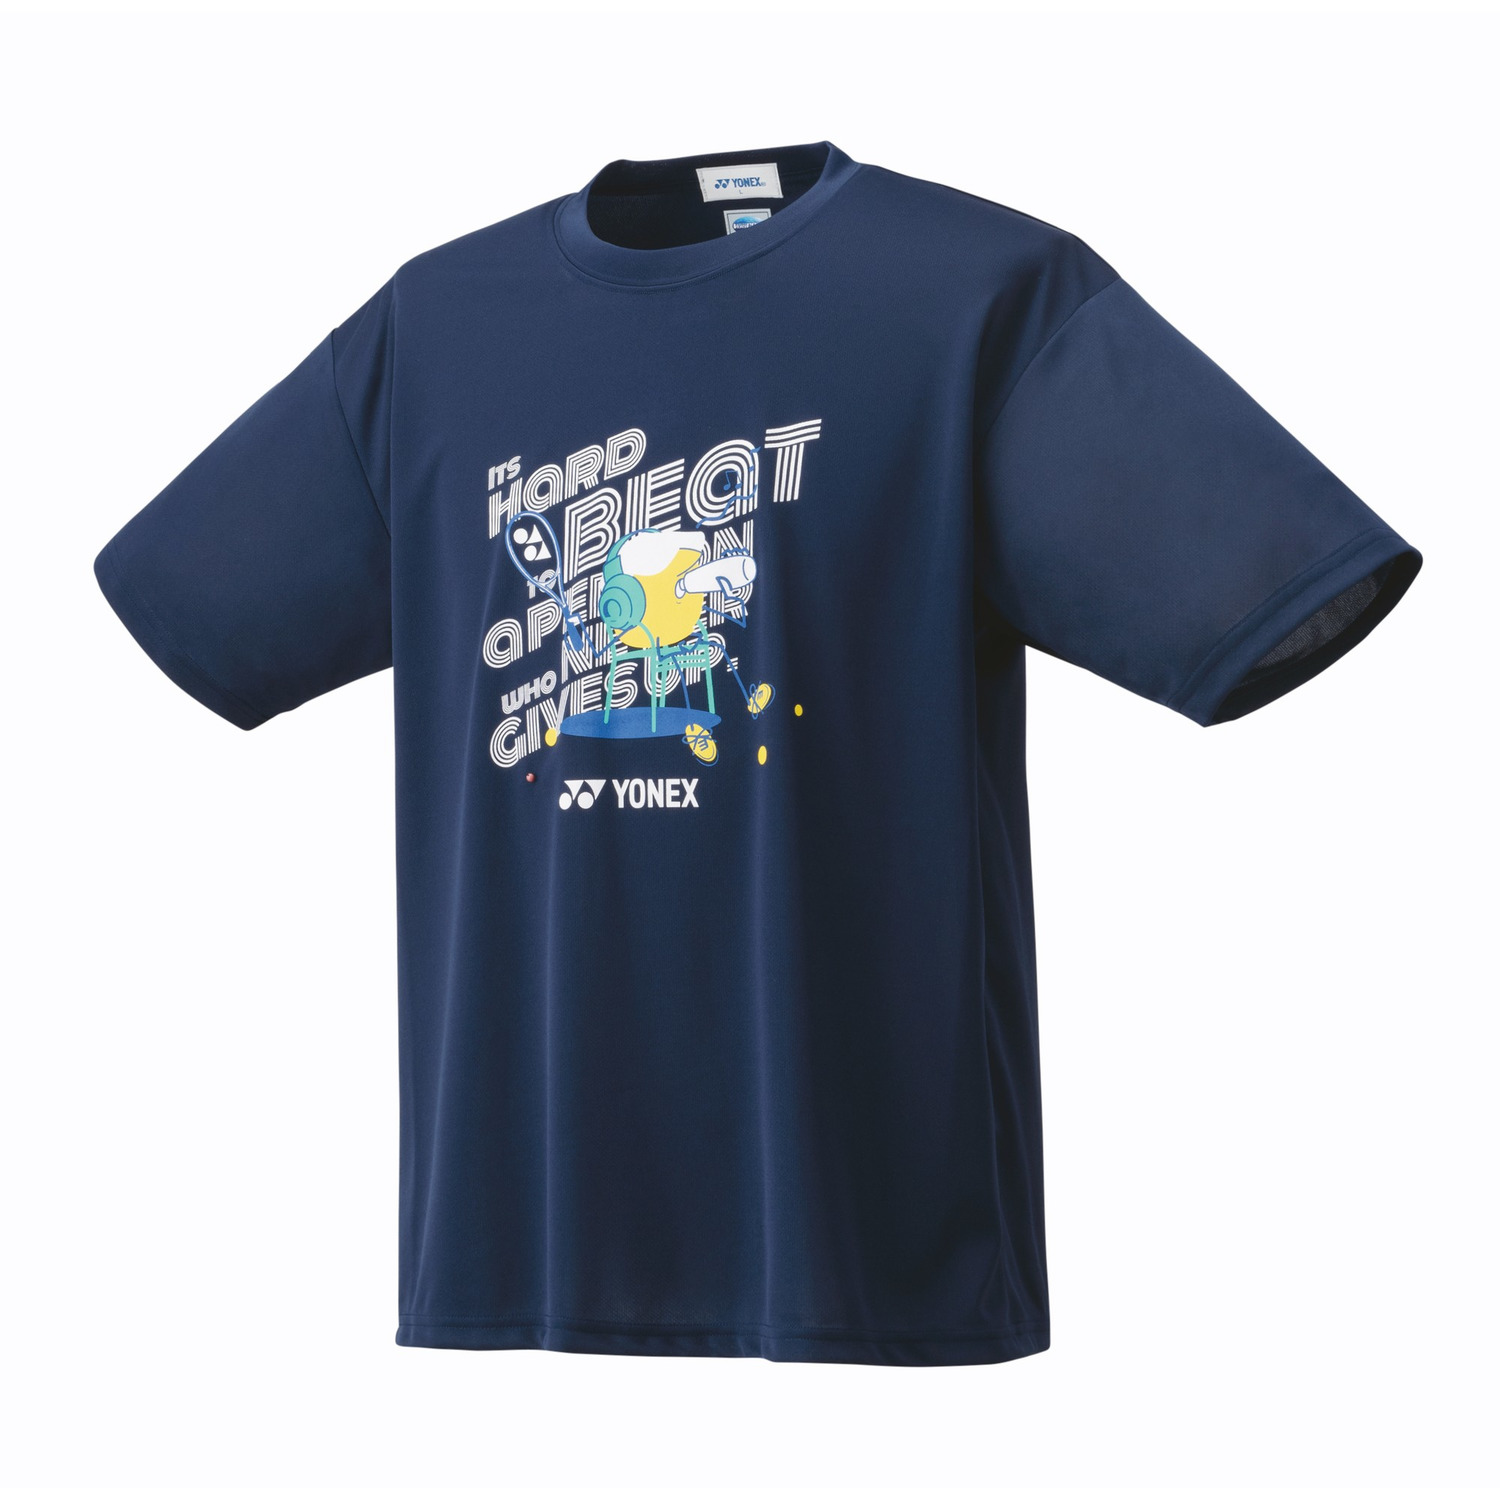 Yonex Badminton/ Tennis Sports Shirt 16726Y Navy Blue (Made in Japan) MEN'S